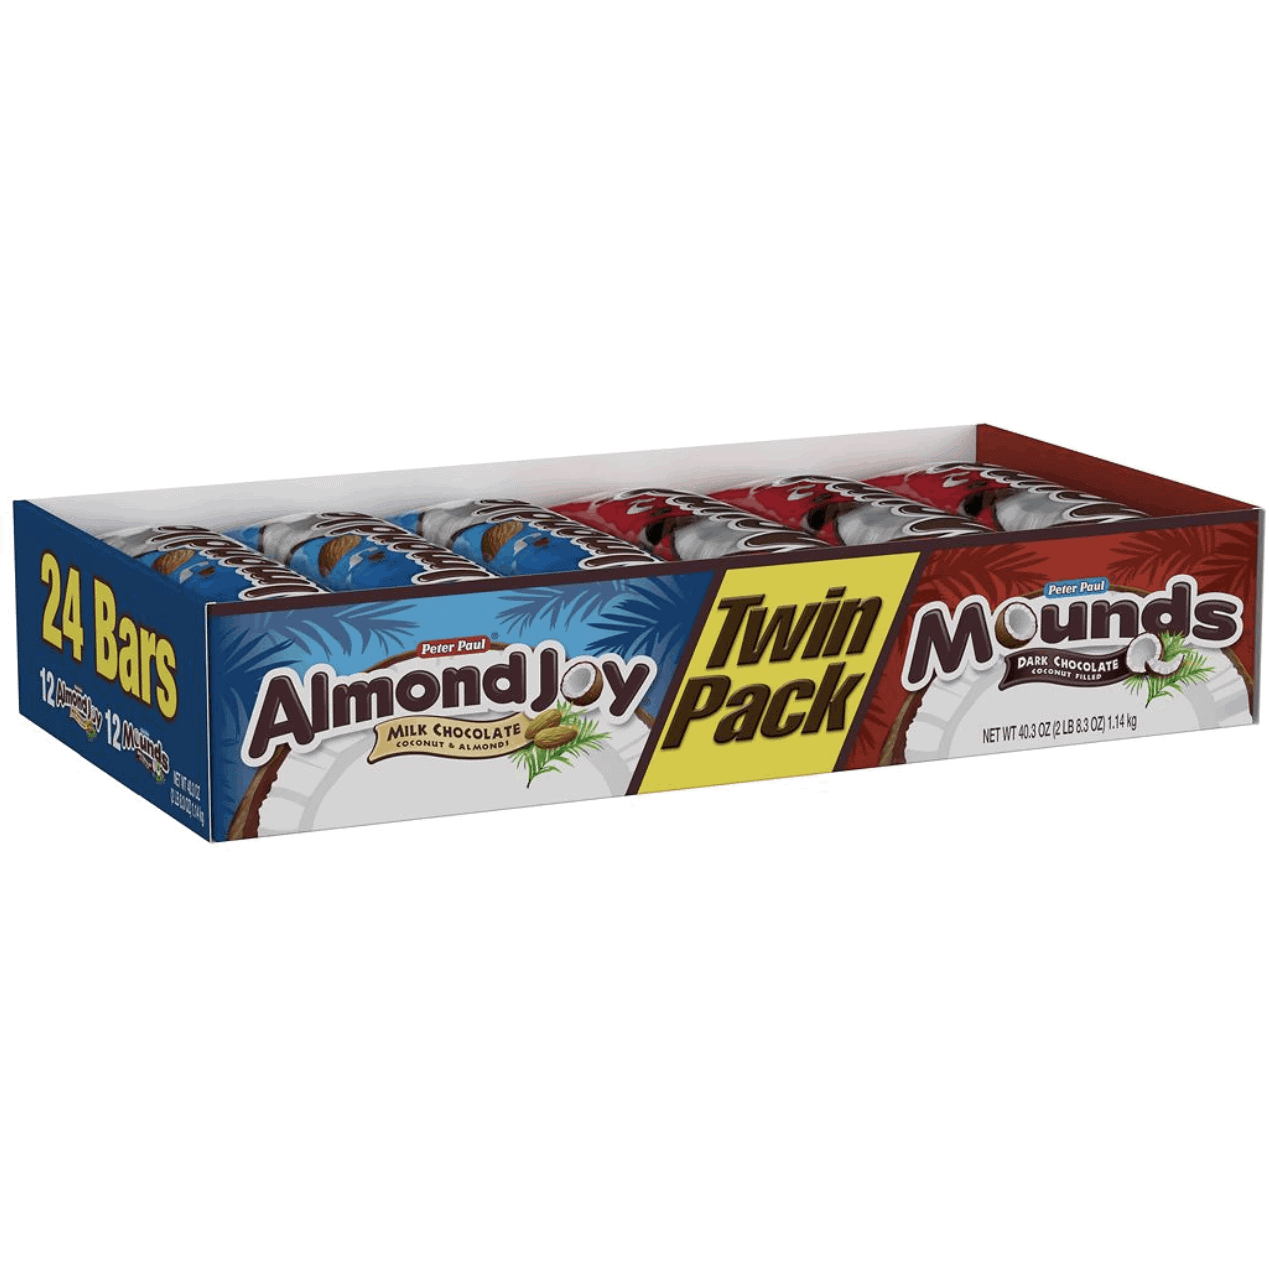 Hershey's Mounds and Almond Joy Bars, 24 ct.